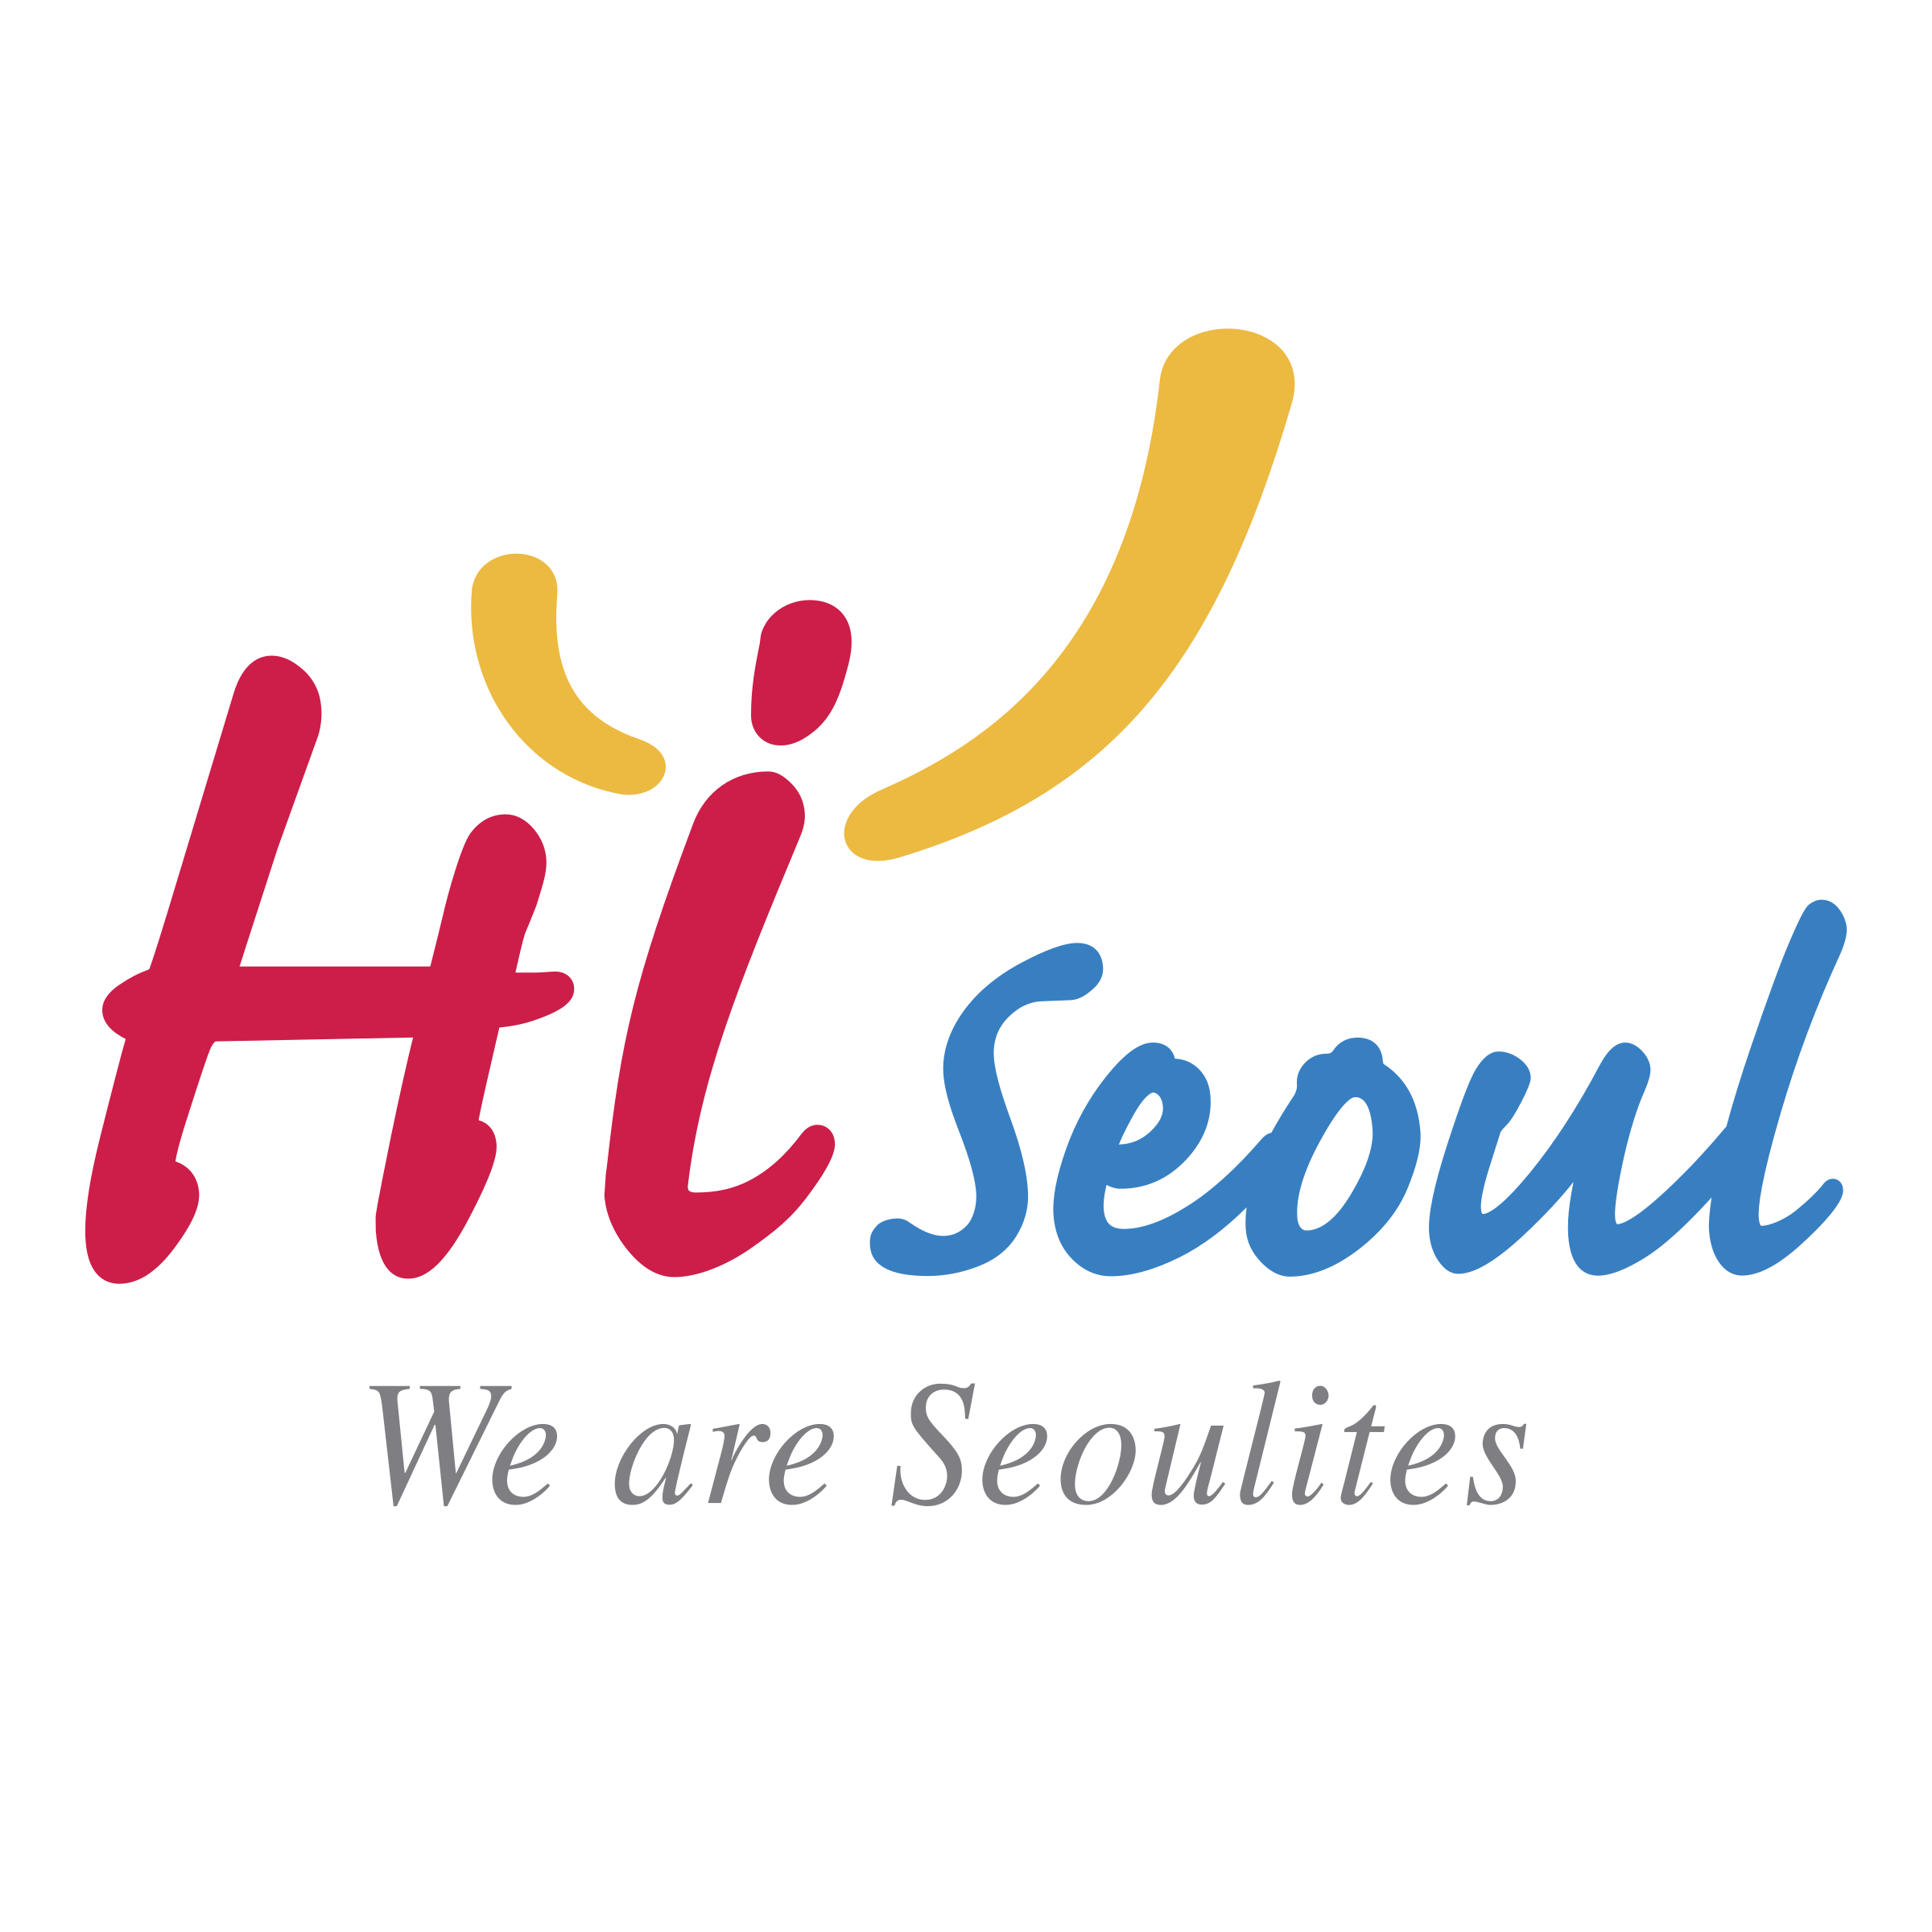 Seoul Logo - Hi Seoul Logo PNG Transparent & SVG Vector - Freebie Supply